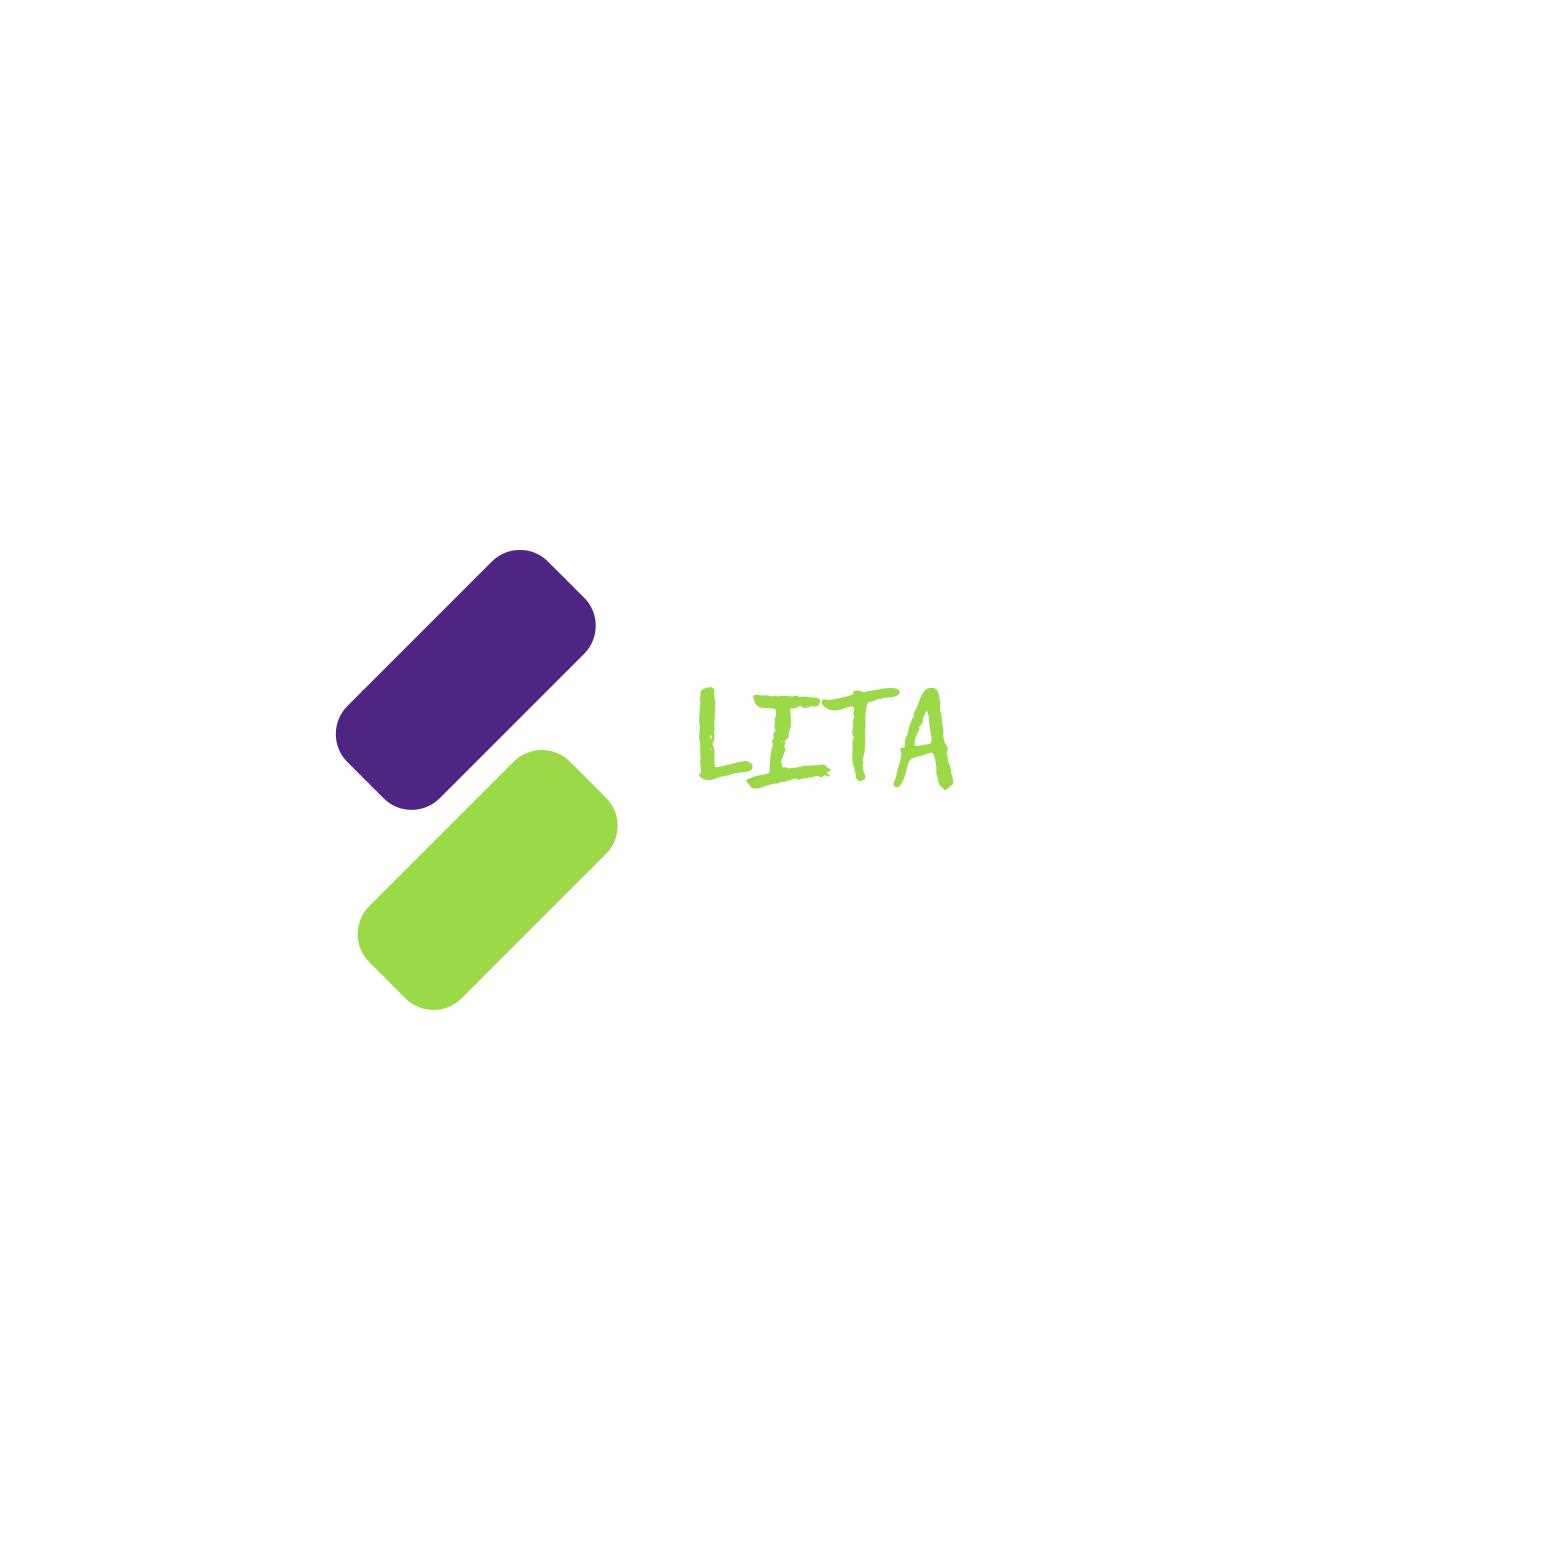 LiTa LLC